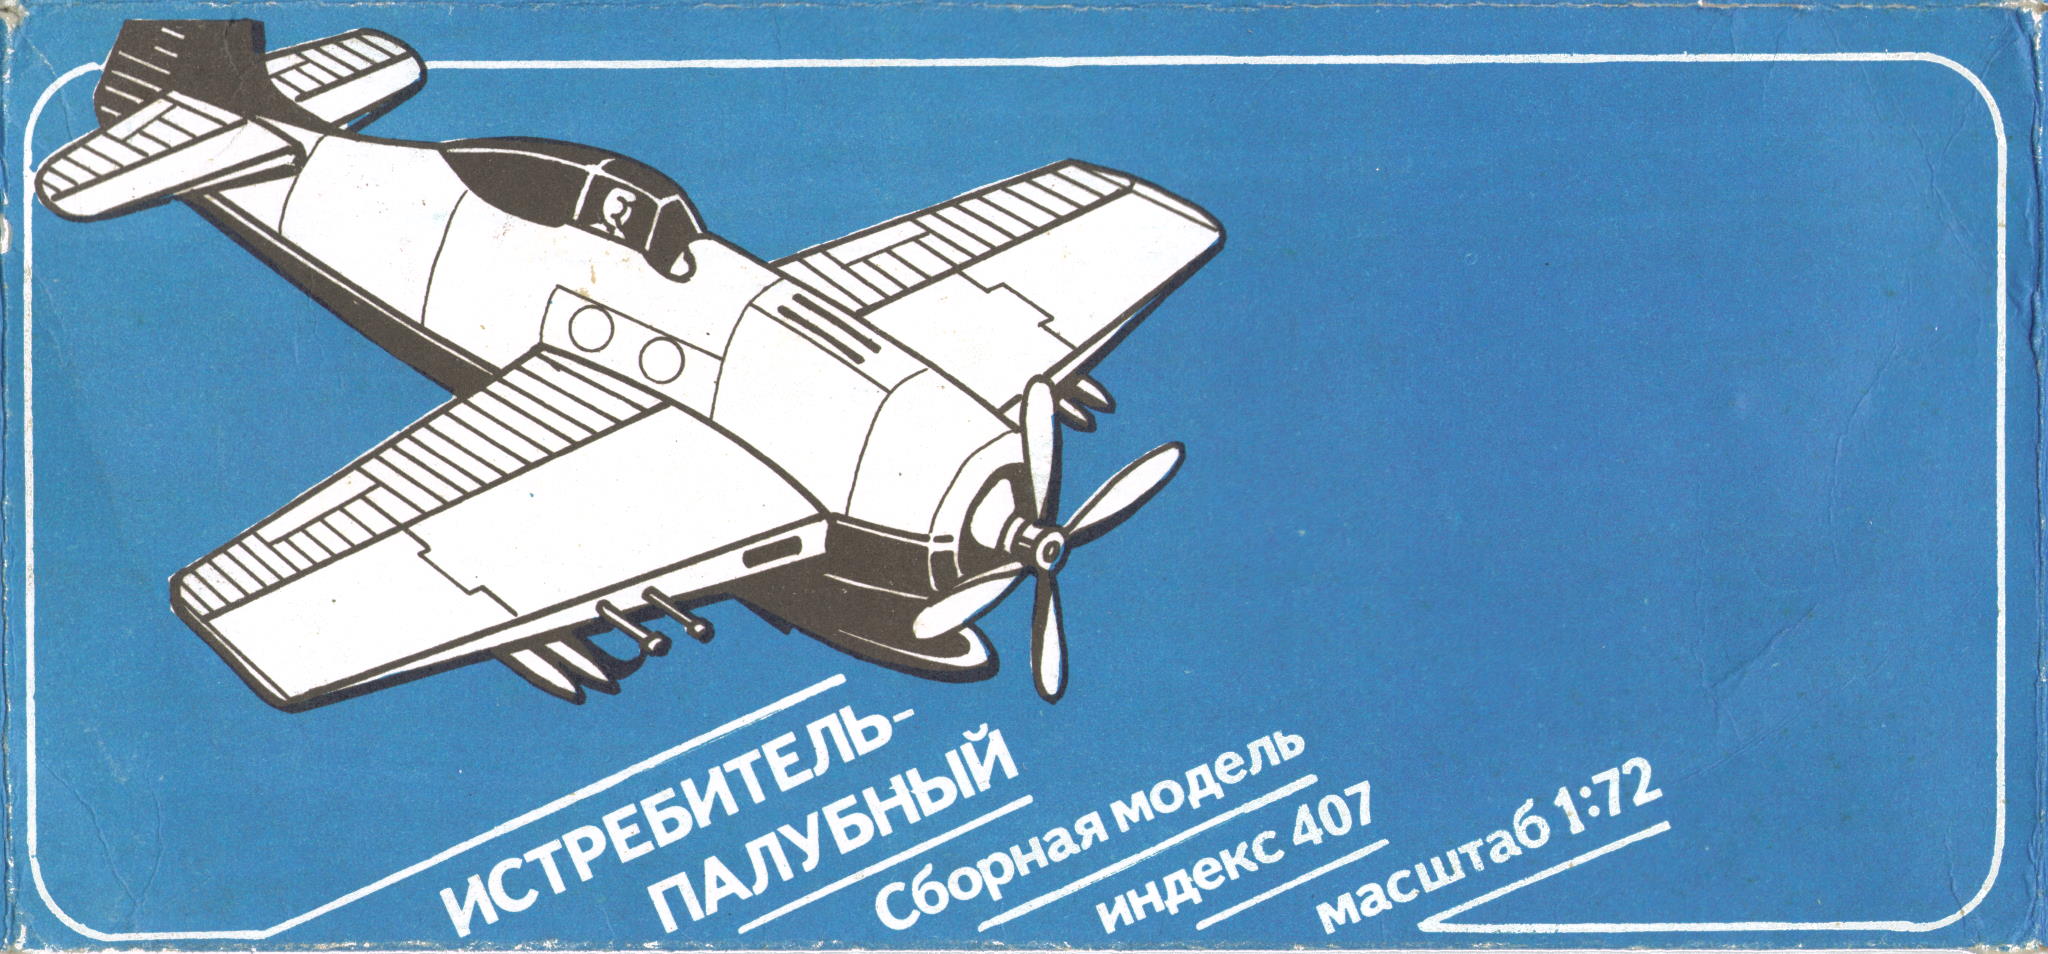 Index 407 Deck fighter, Moscow Test Experimental Plant Ogoniek, 1986-1989, коробка с клапанами с двух сторон